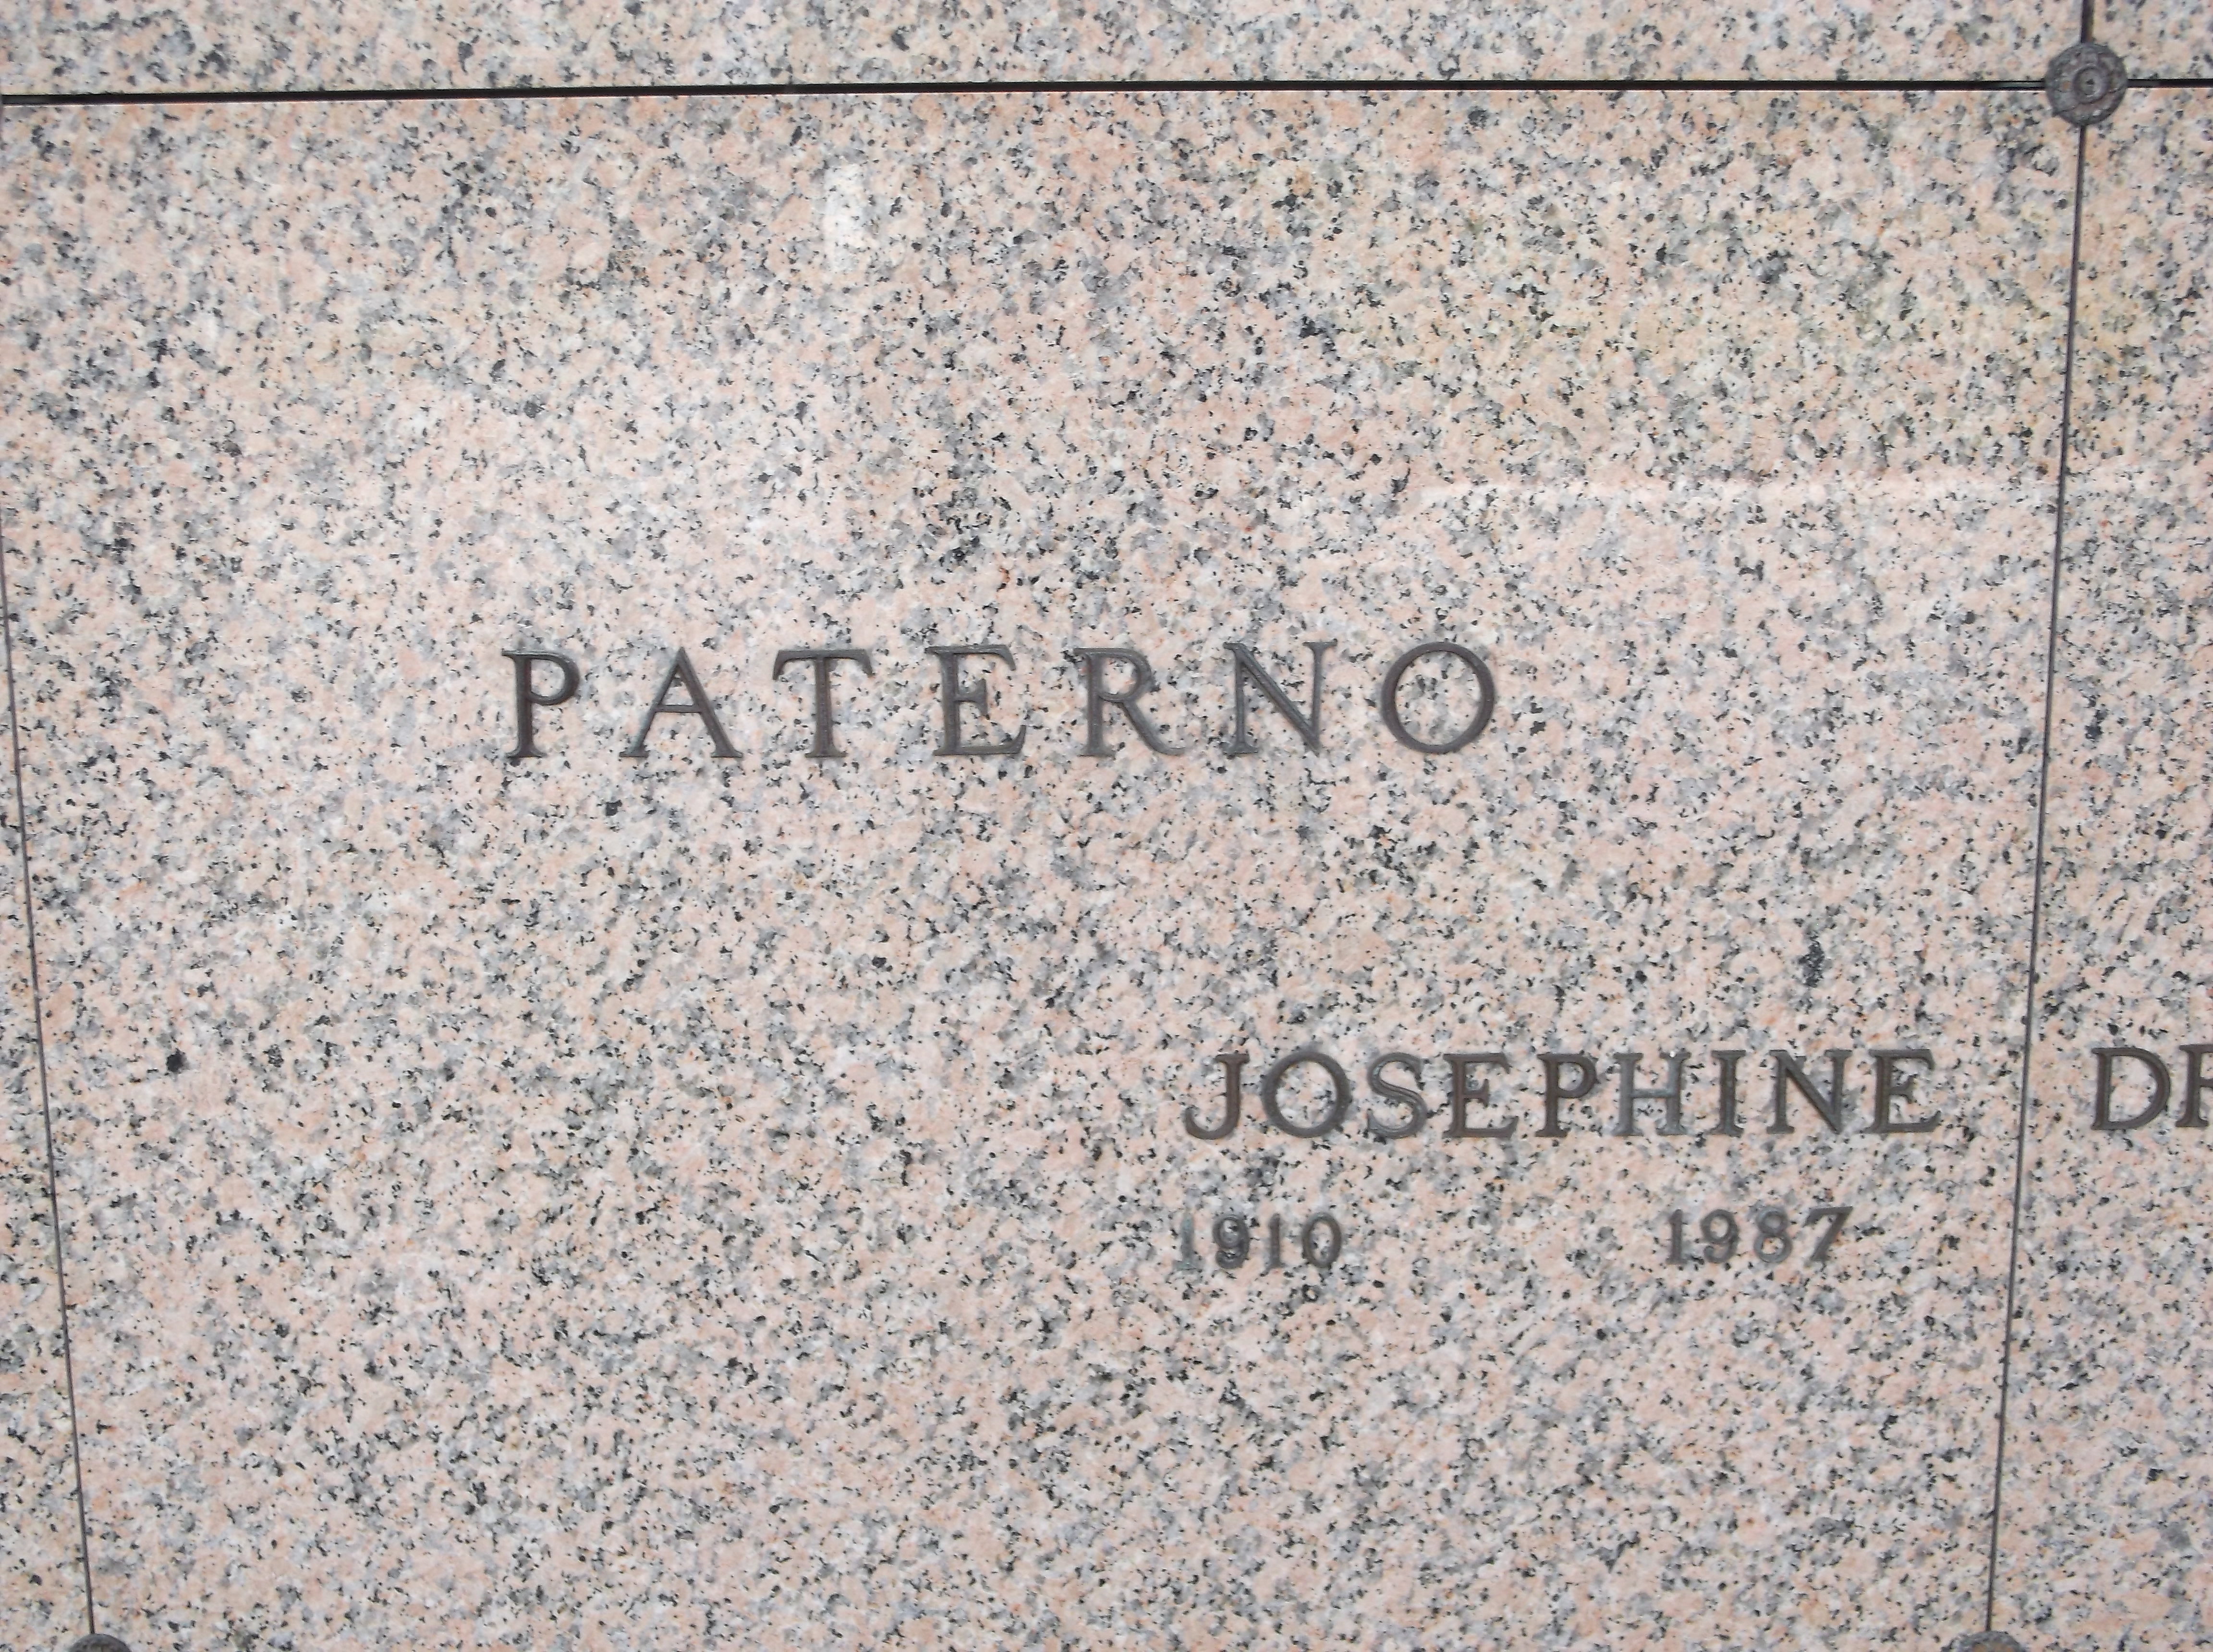 Josephine Paterno